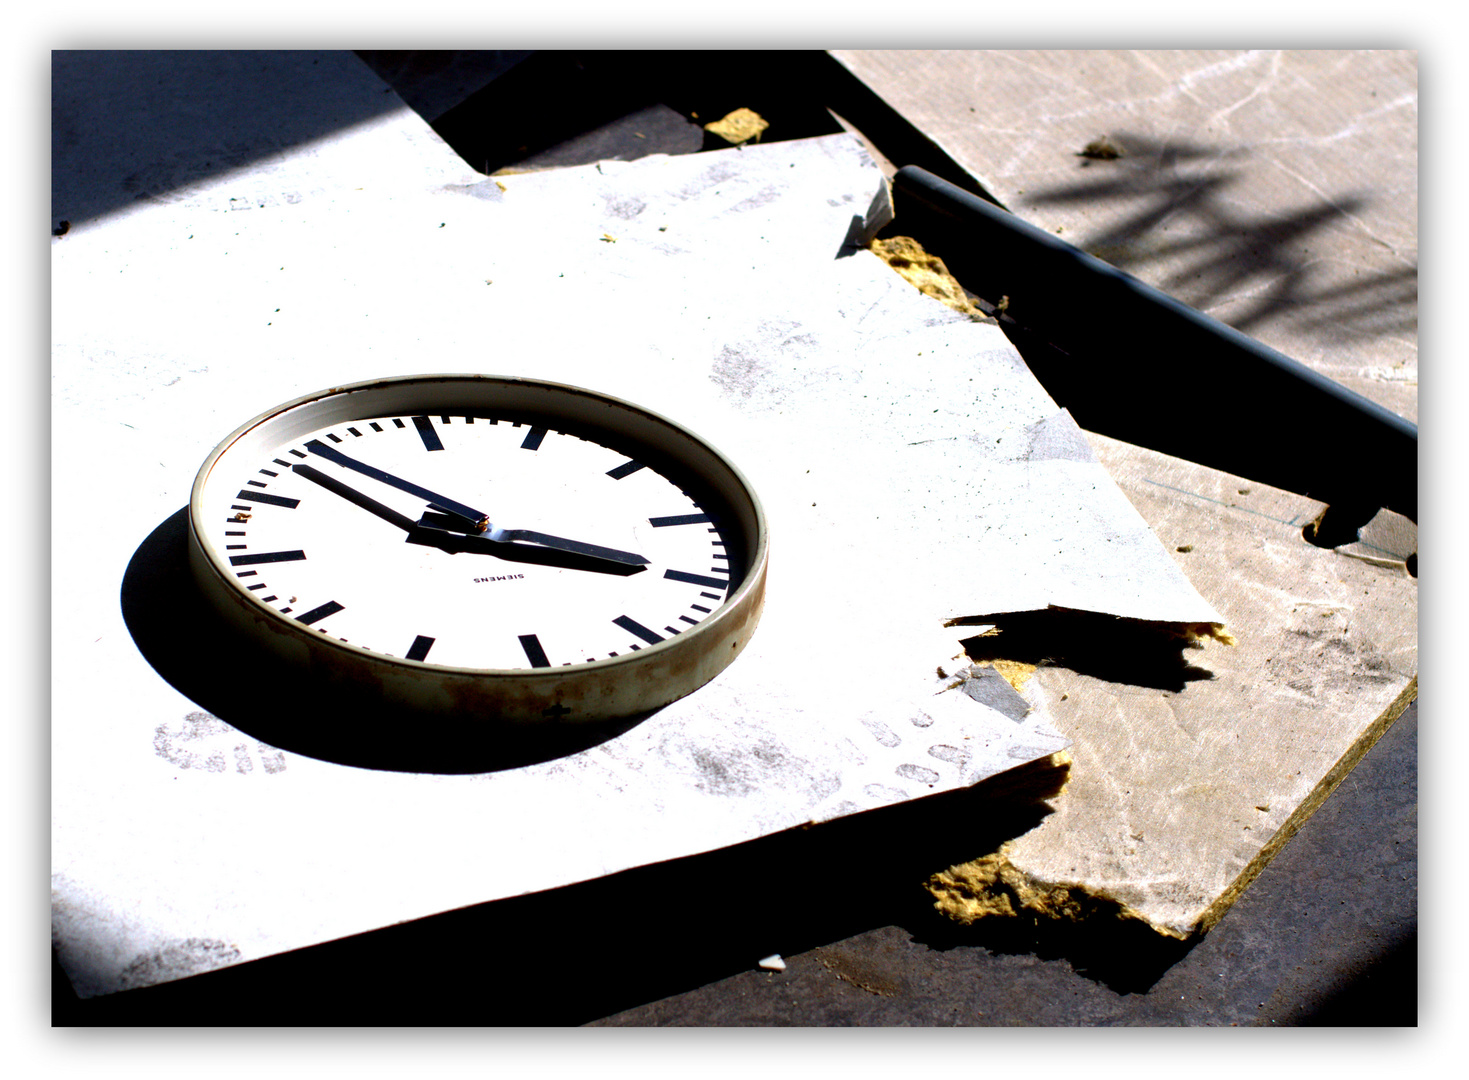 When time stood still at Philips (Siemens clock)